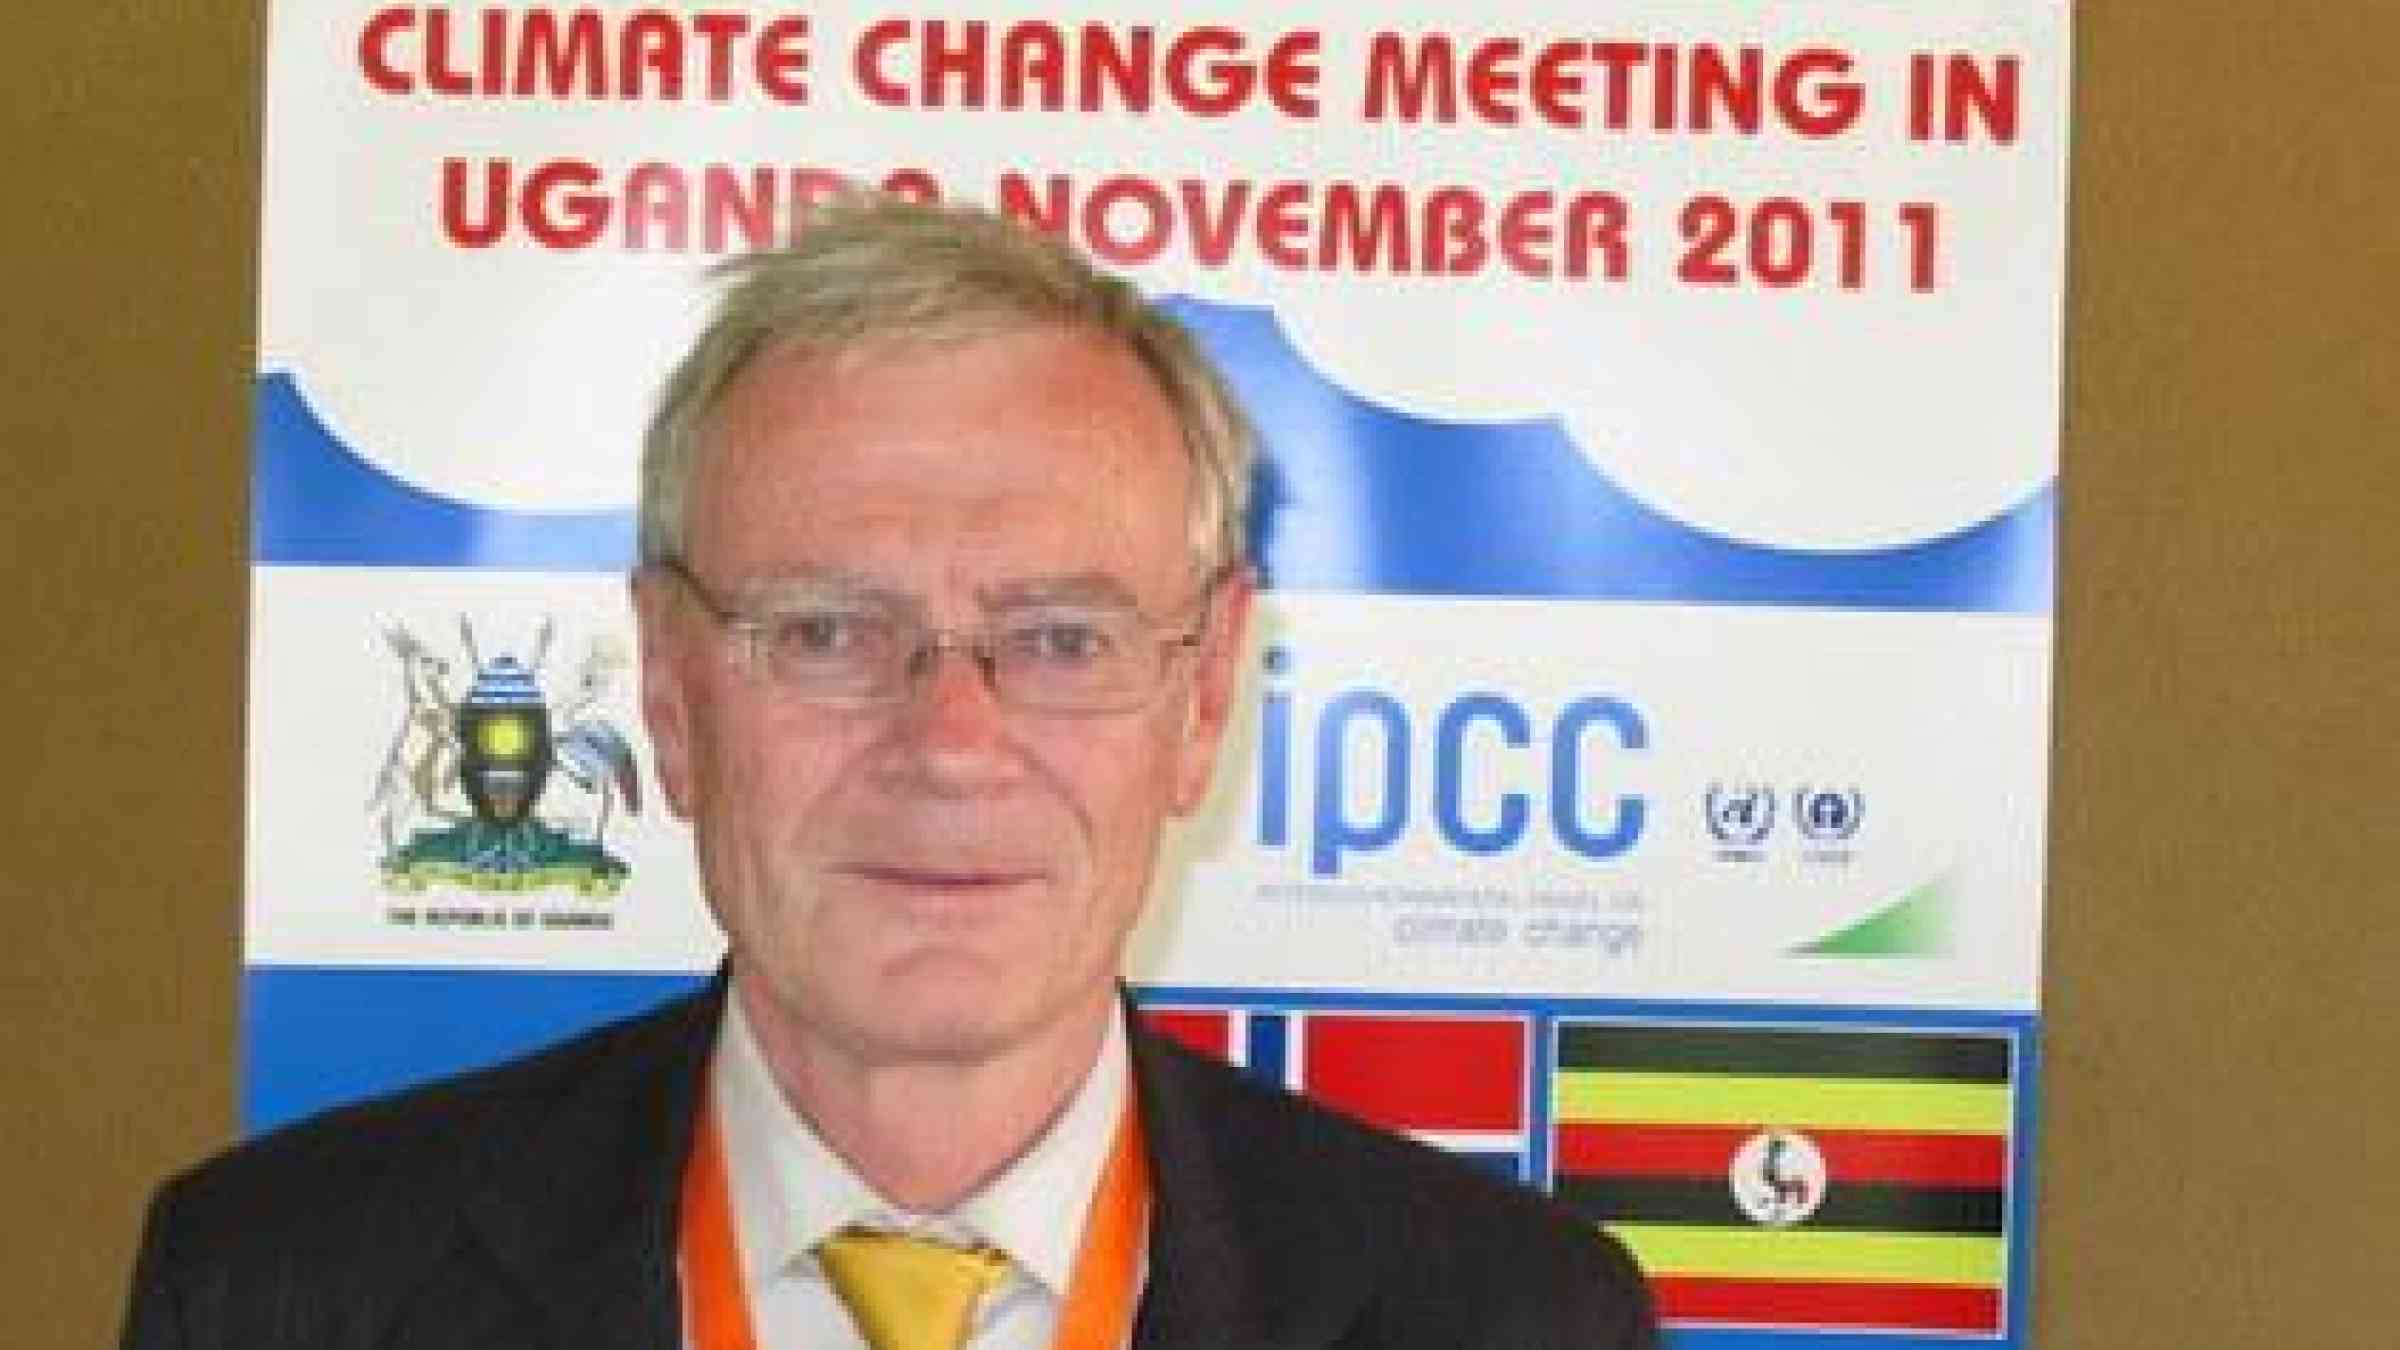 Øyvind Christophersen, Senior Adviser, Climate and Pollution Agency, Norway